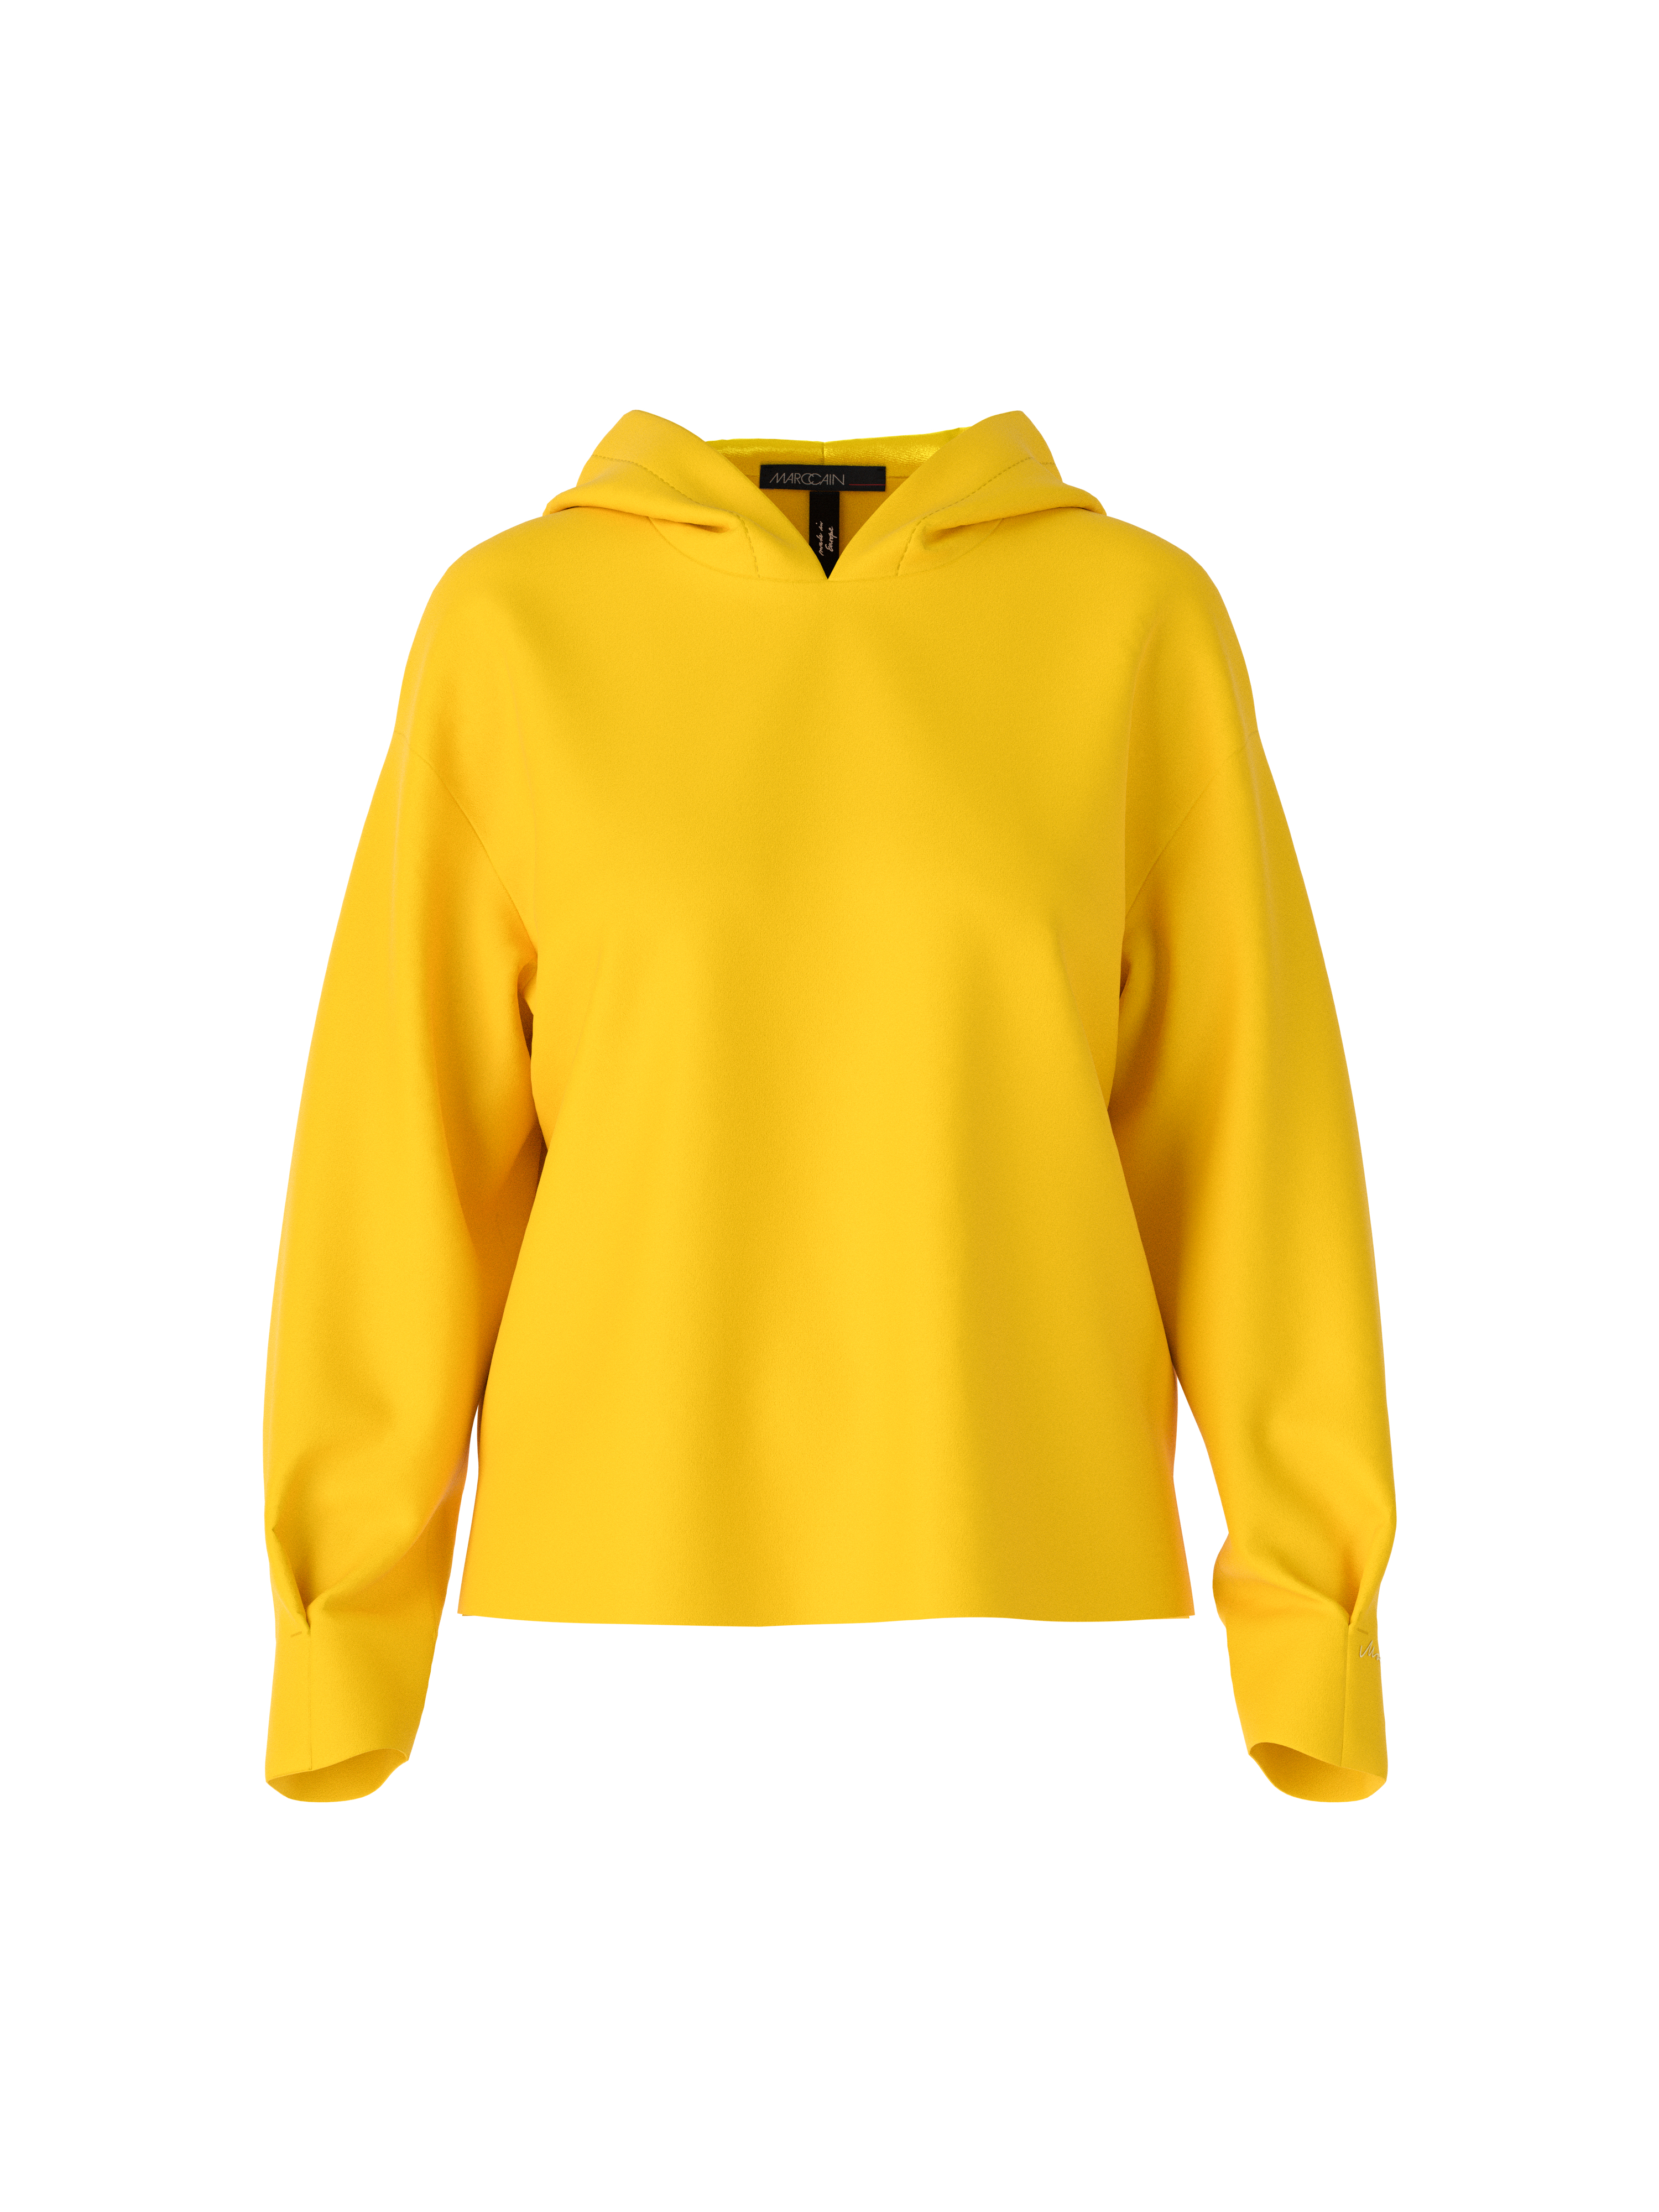 MARC CAIN TC 44.05 W30 Sweatshirt mit Kapuze gelb saffron yellow